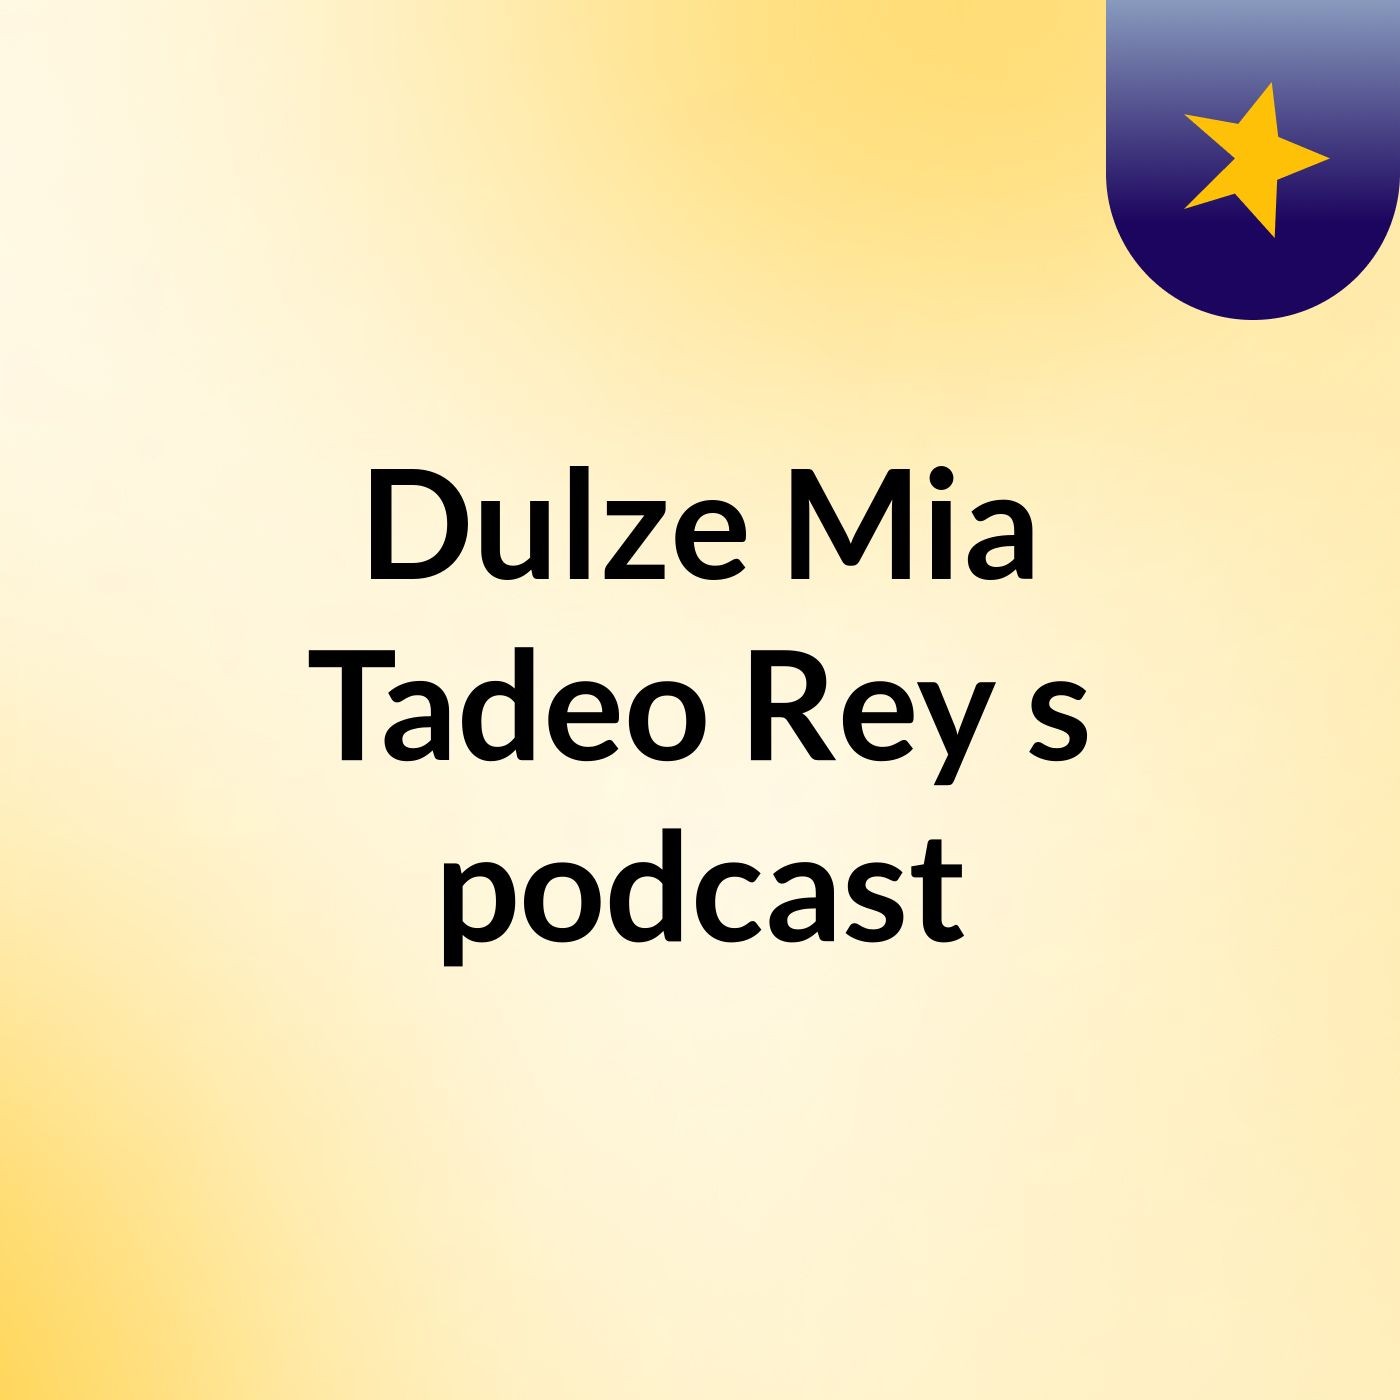 Episodio 11 - Dulze Mia Tadeo Rey's podcast